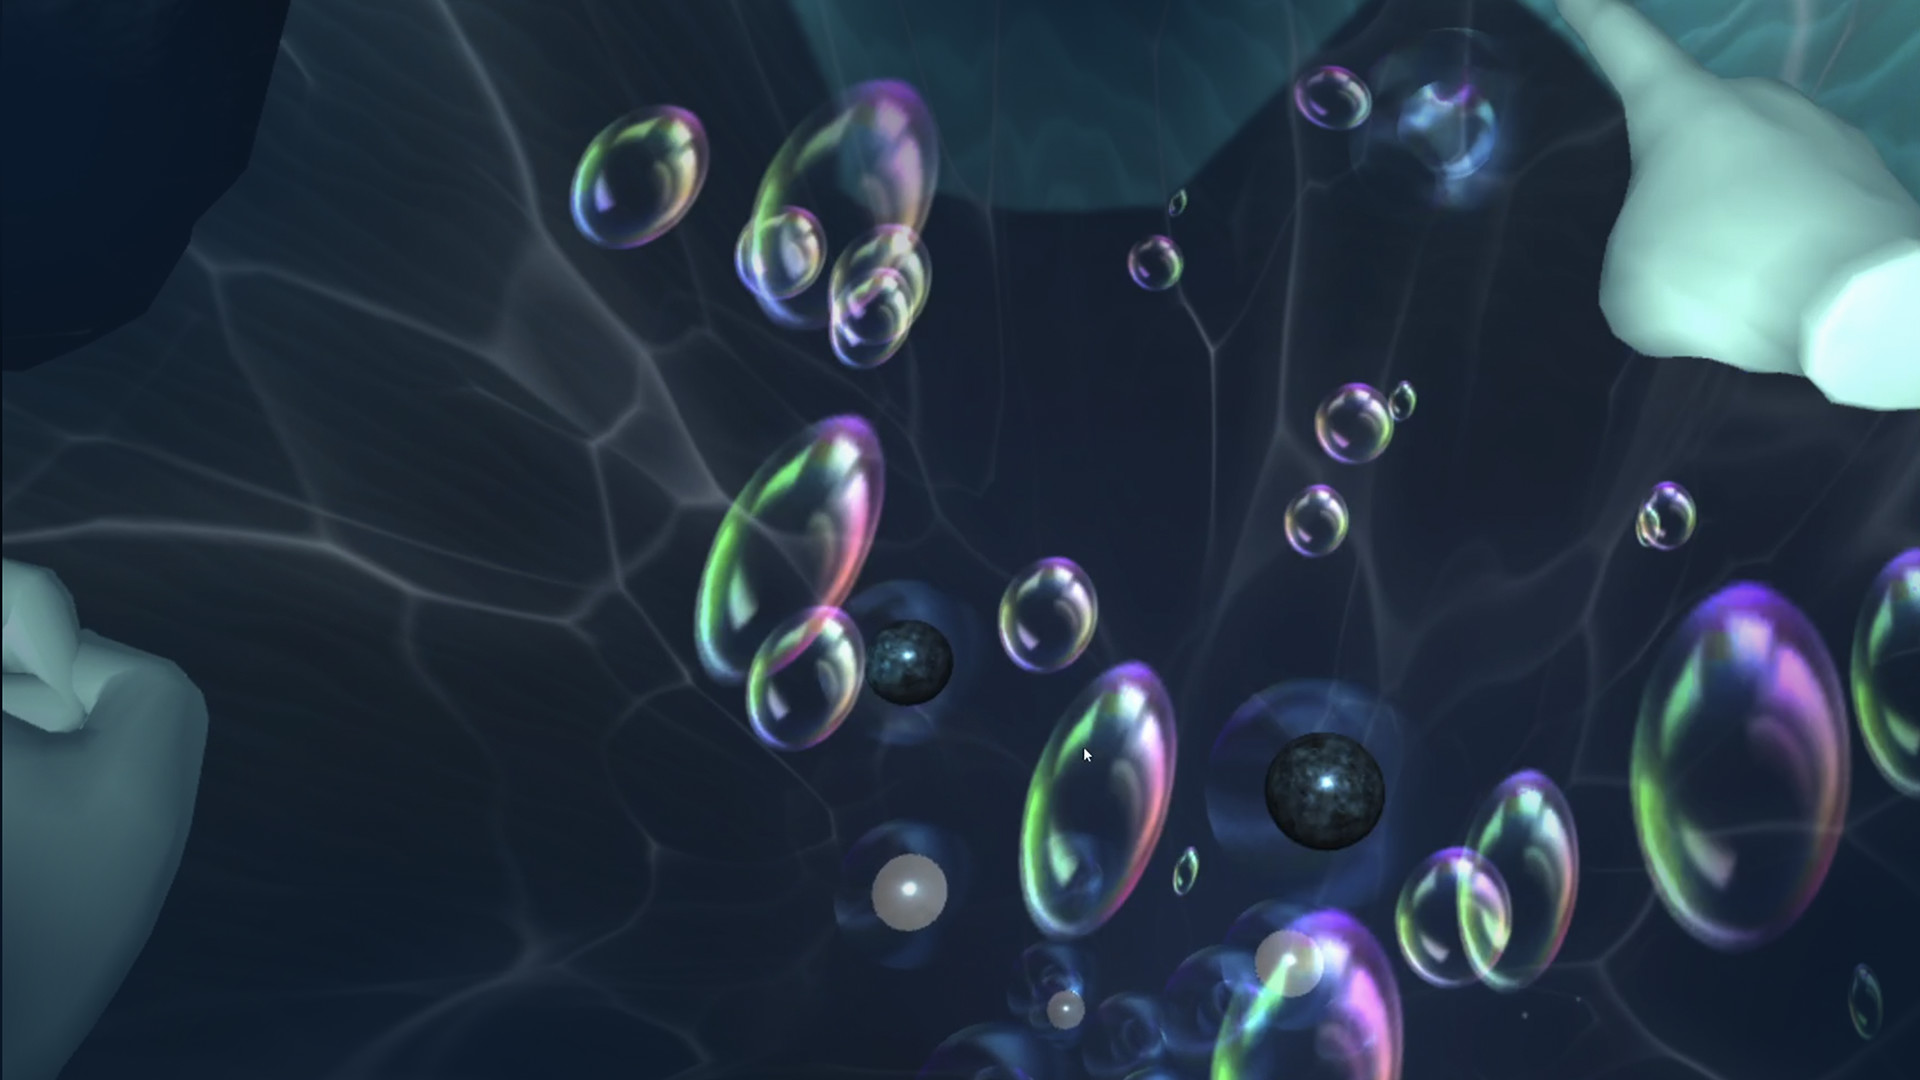 Bubbles & Pearls Steam CD Key